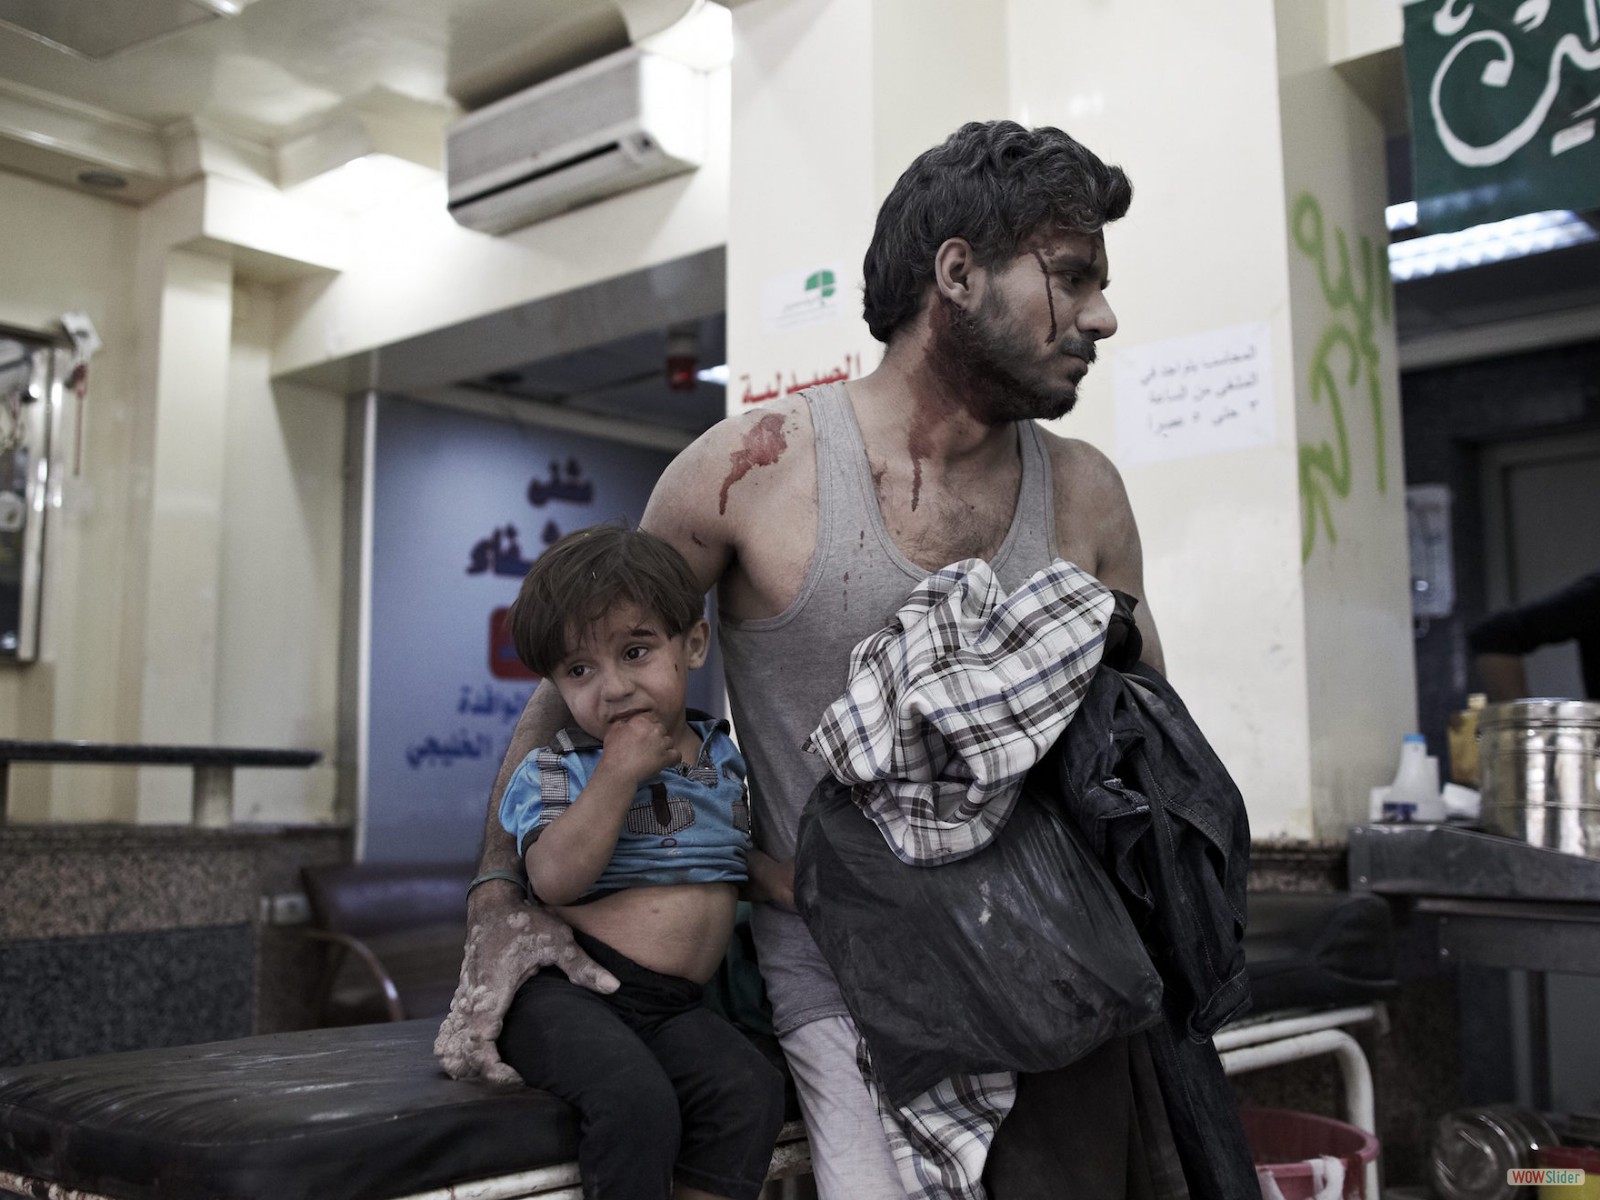 Après une attaque aérienne, un père et son fils attendent d’être soignés dans un des derniers hôpitaux encore debout à Alep.
<br><i><b>

A father and son after an air attack, waiting for medical treatment in one of the last hospitals still standing in Aleppo.
</b></i><br><i>© Sebastiano Tomada - Sipa Press - 2013</i>
